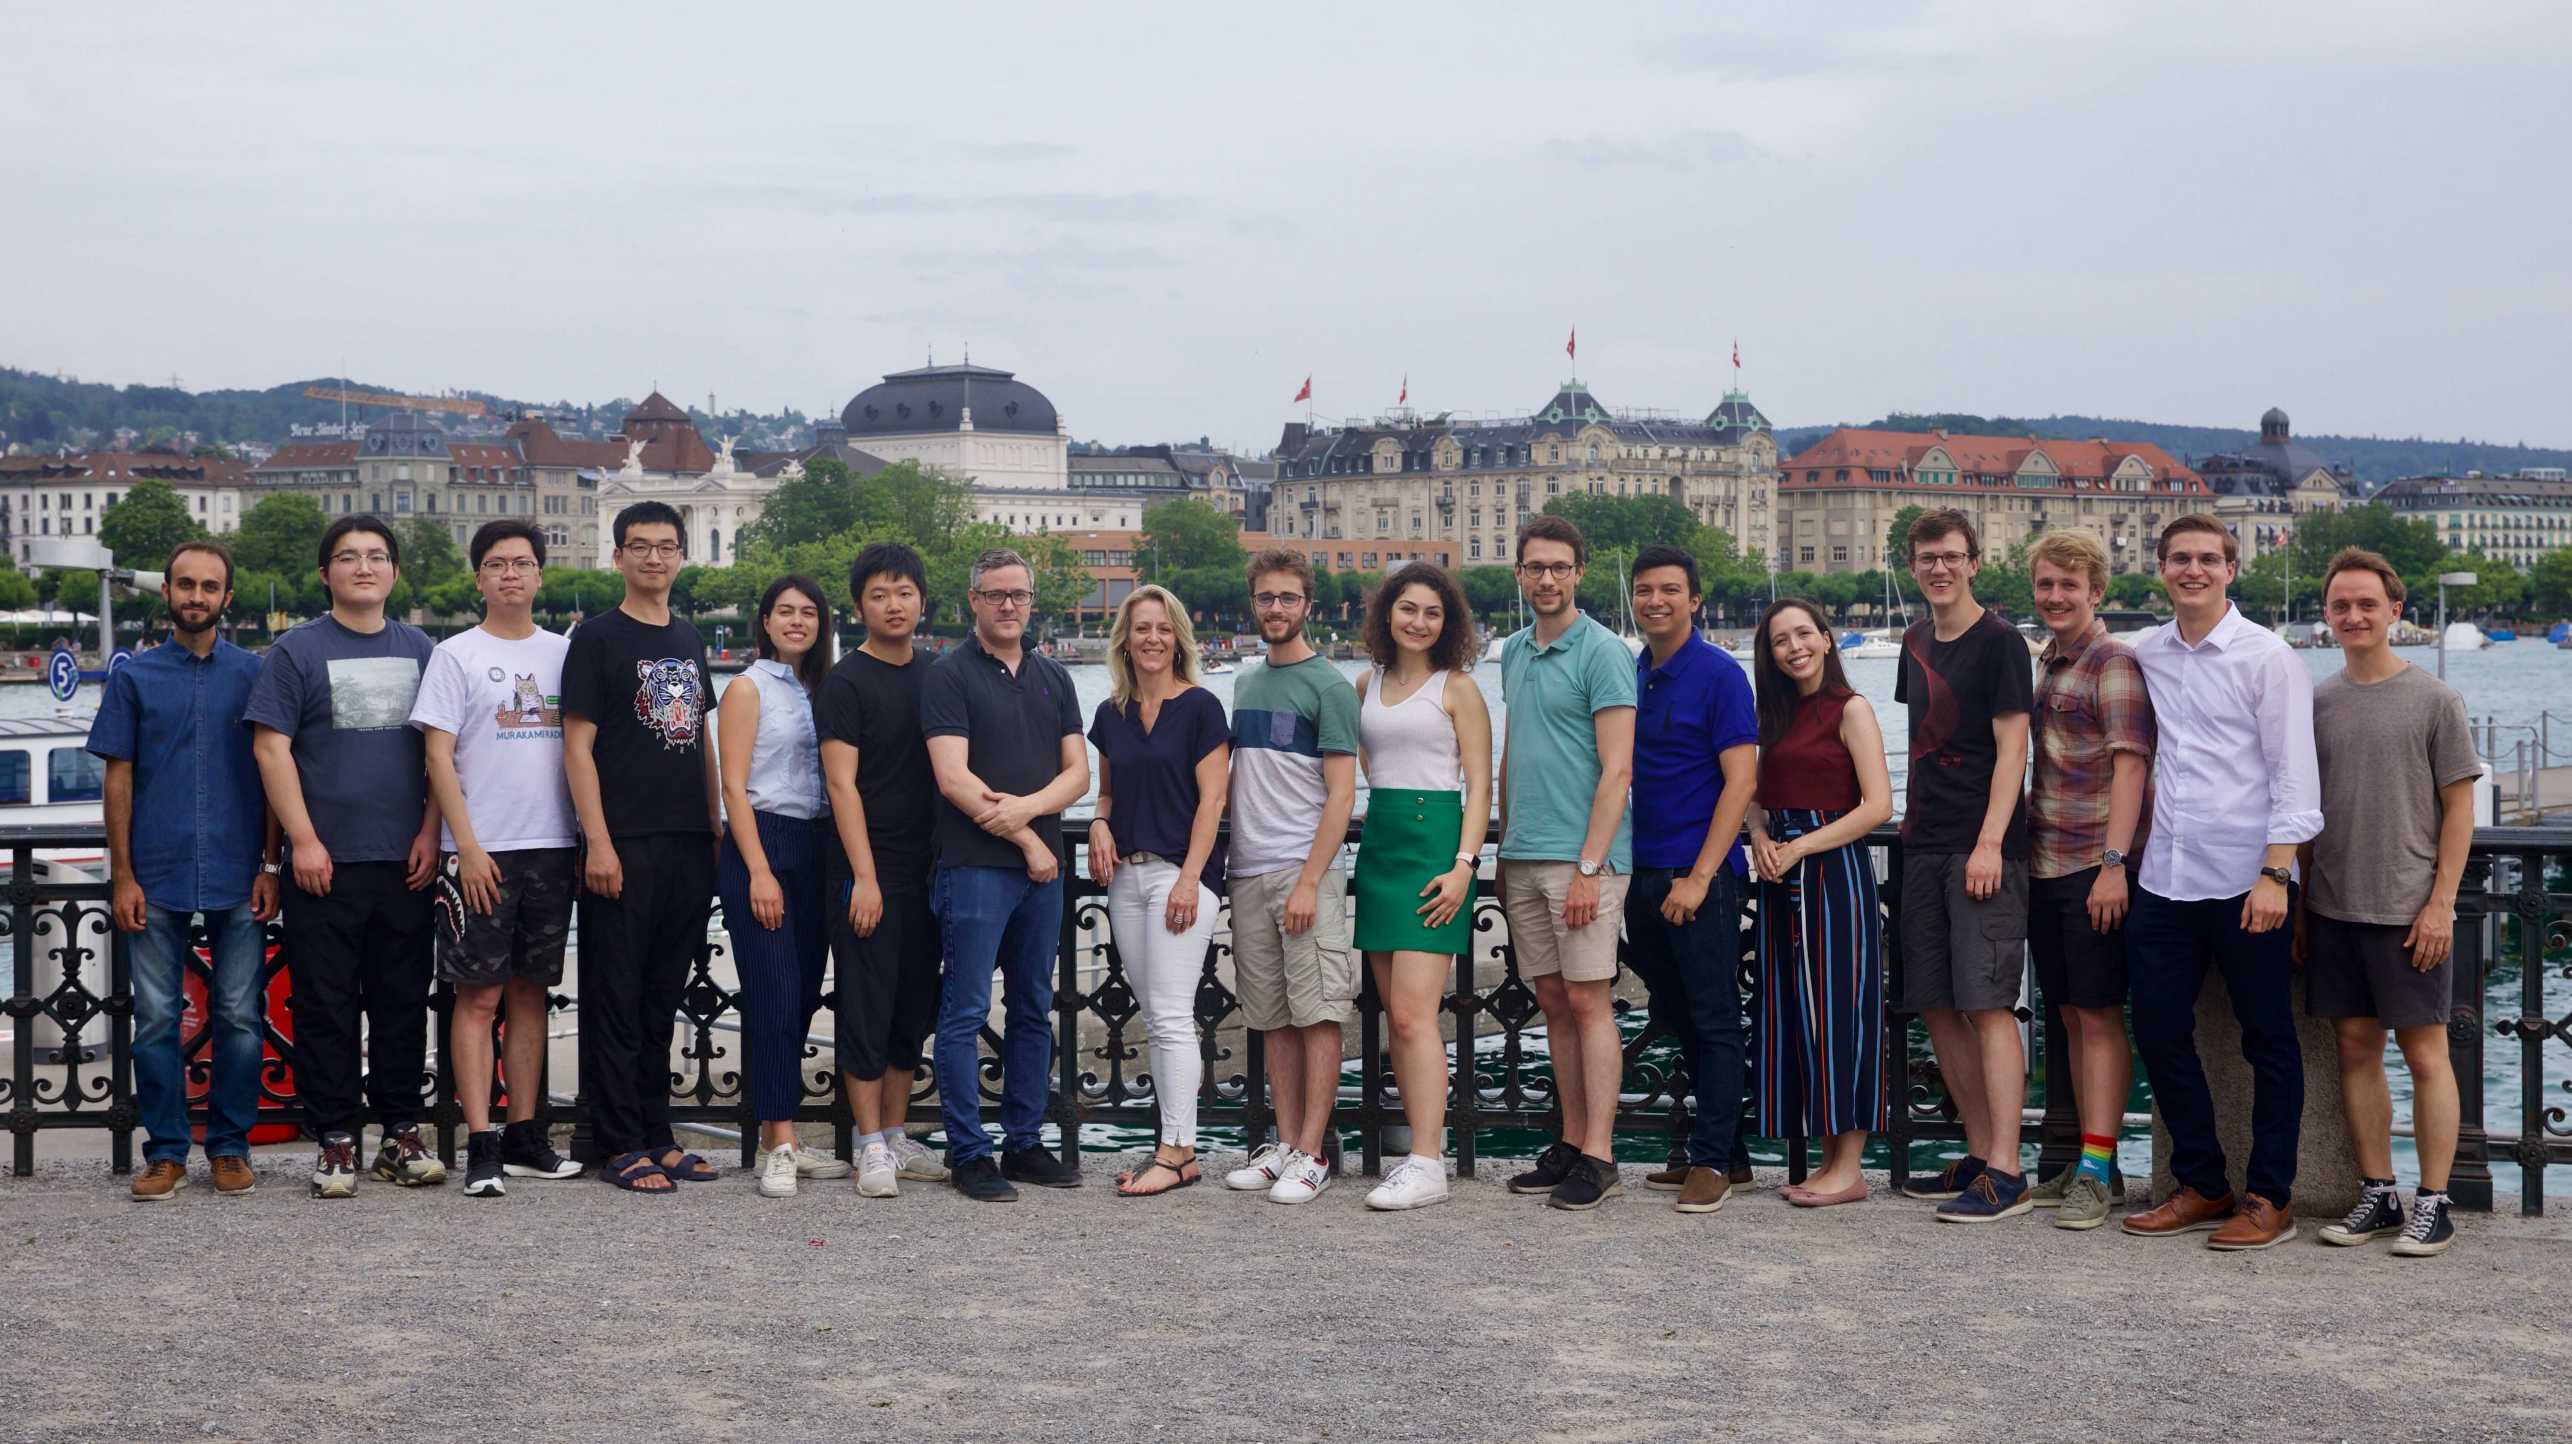 Photo of the IIP Group and associate students taken in June 2022 at Bürkliplatz